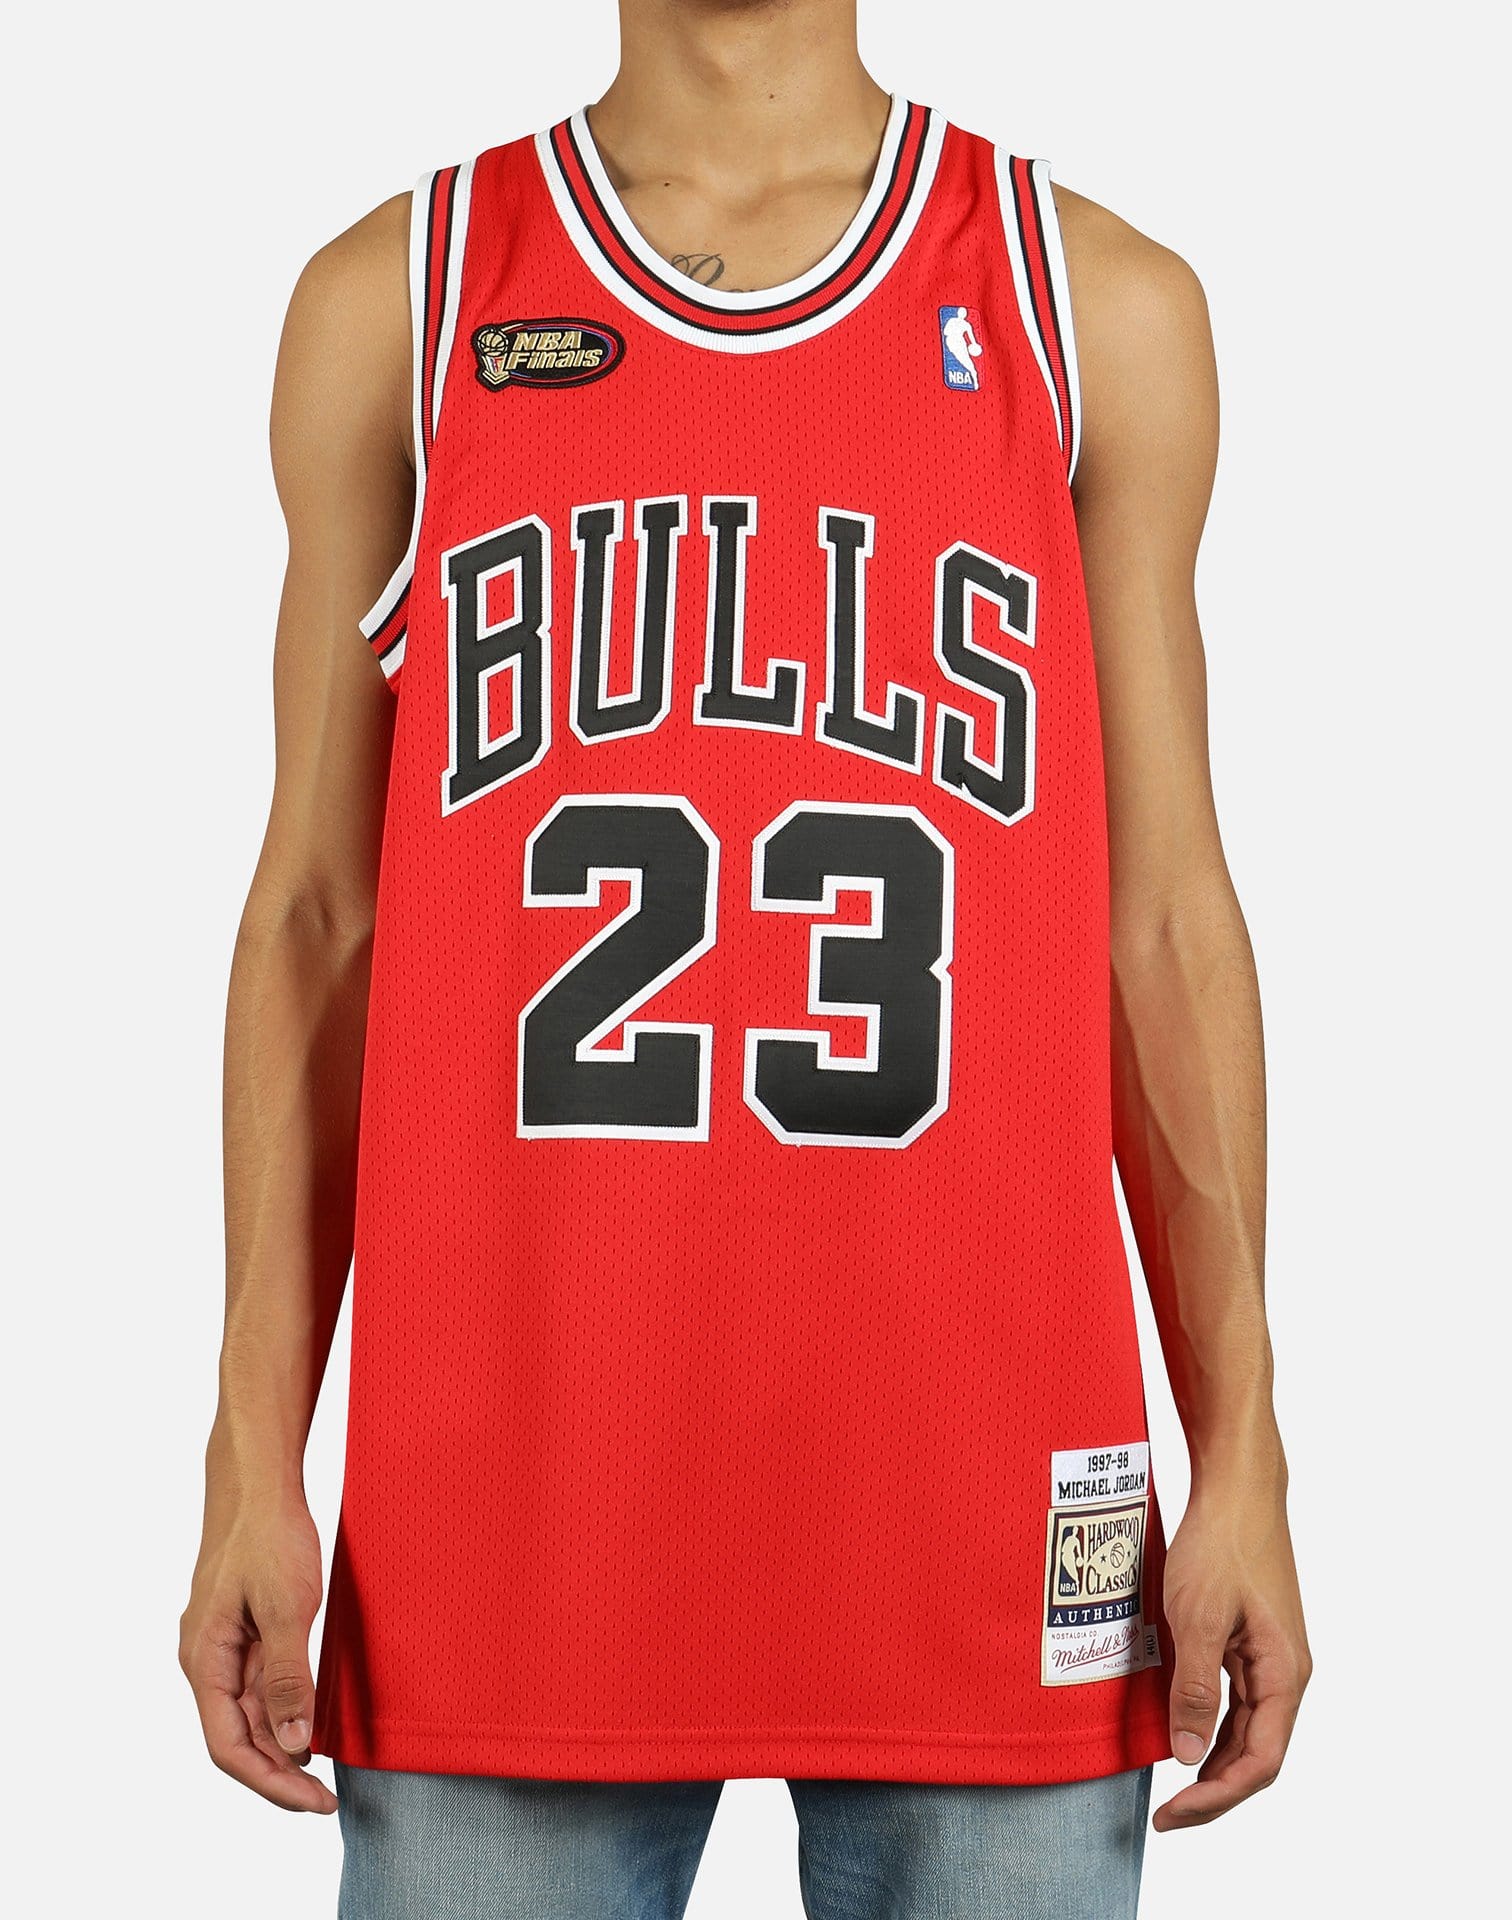 Mitchell & Ness Authentic Jersey Chicago Bulls Home 1997-98 Michael Jordan S